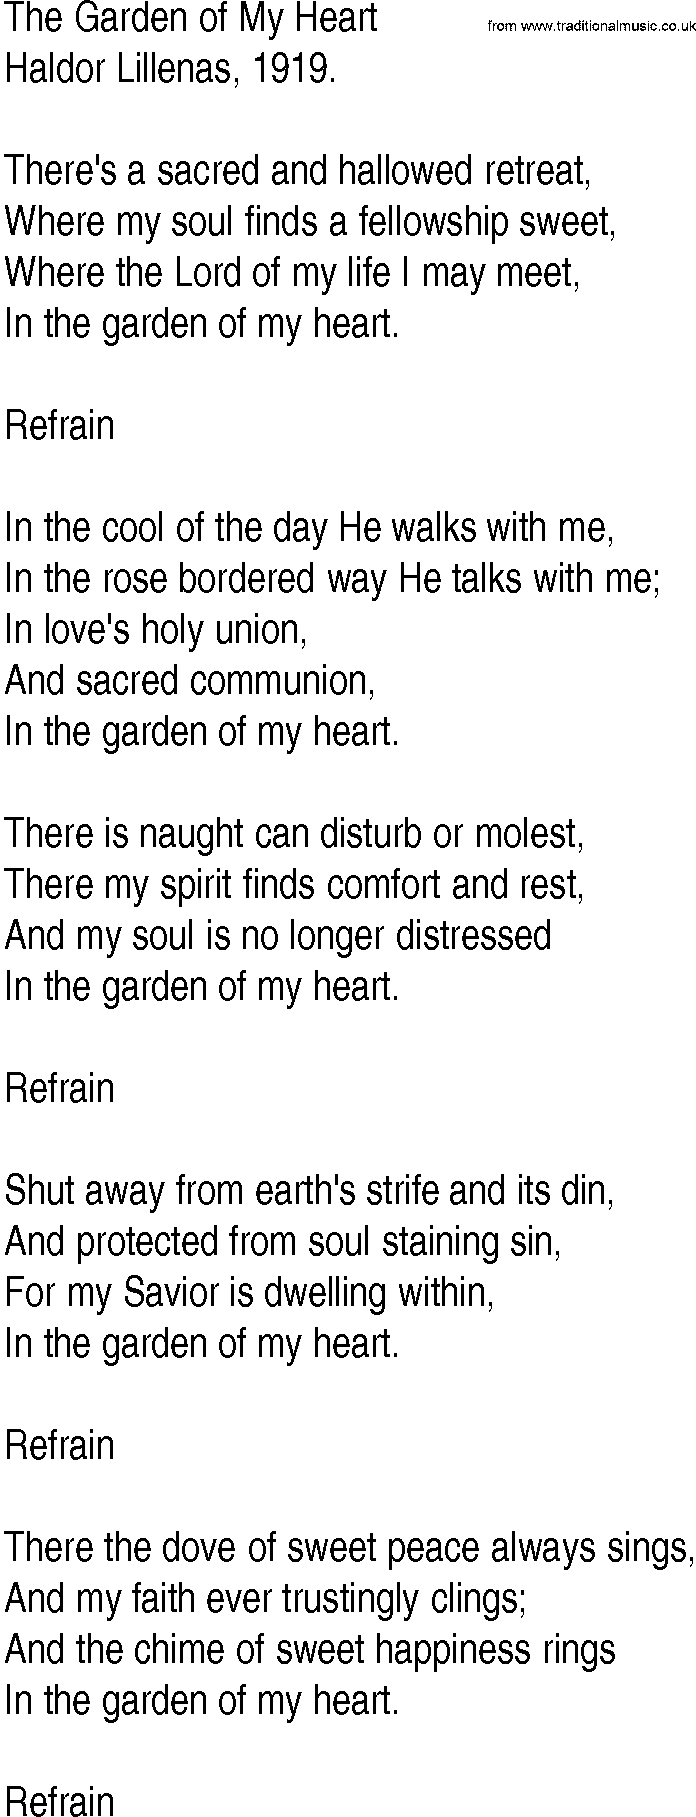 Hymn and Gospel Song: The Garden of My Heart by Haldor Lillenas lyrics